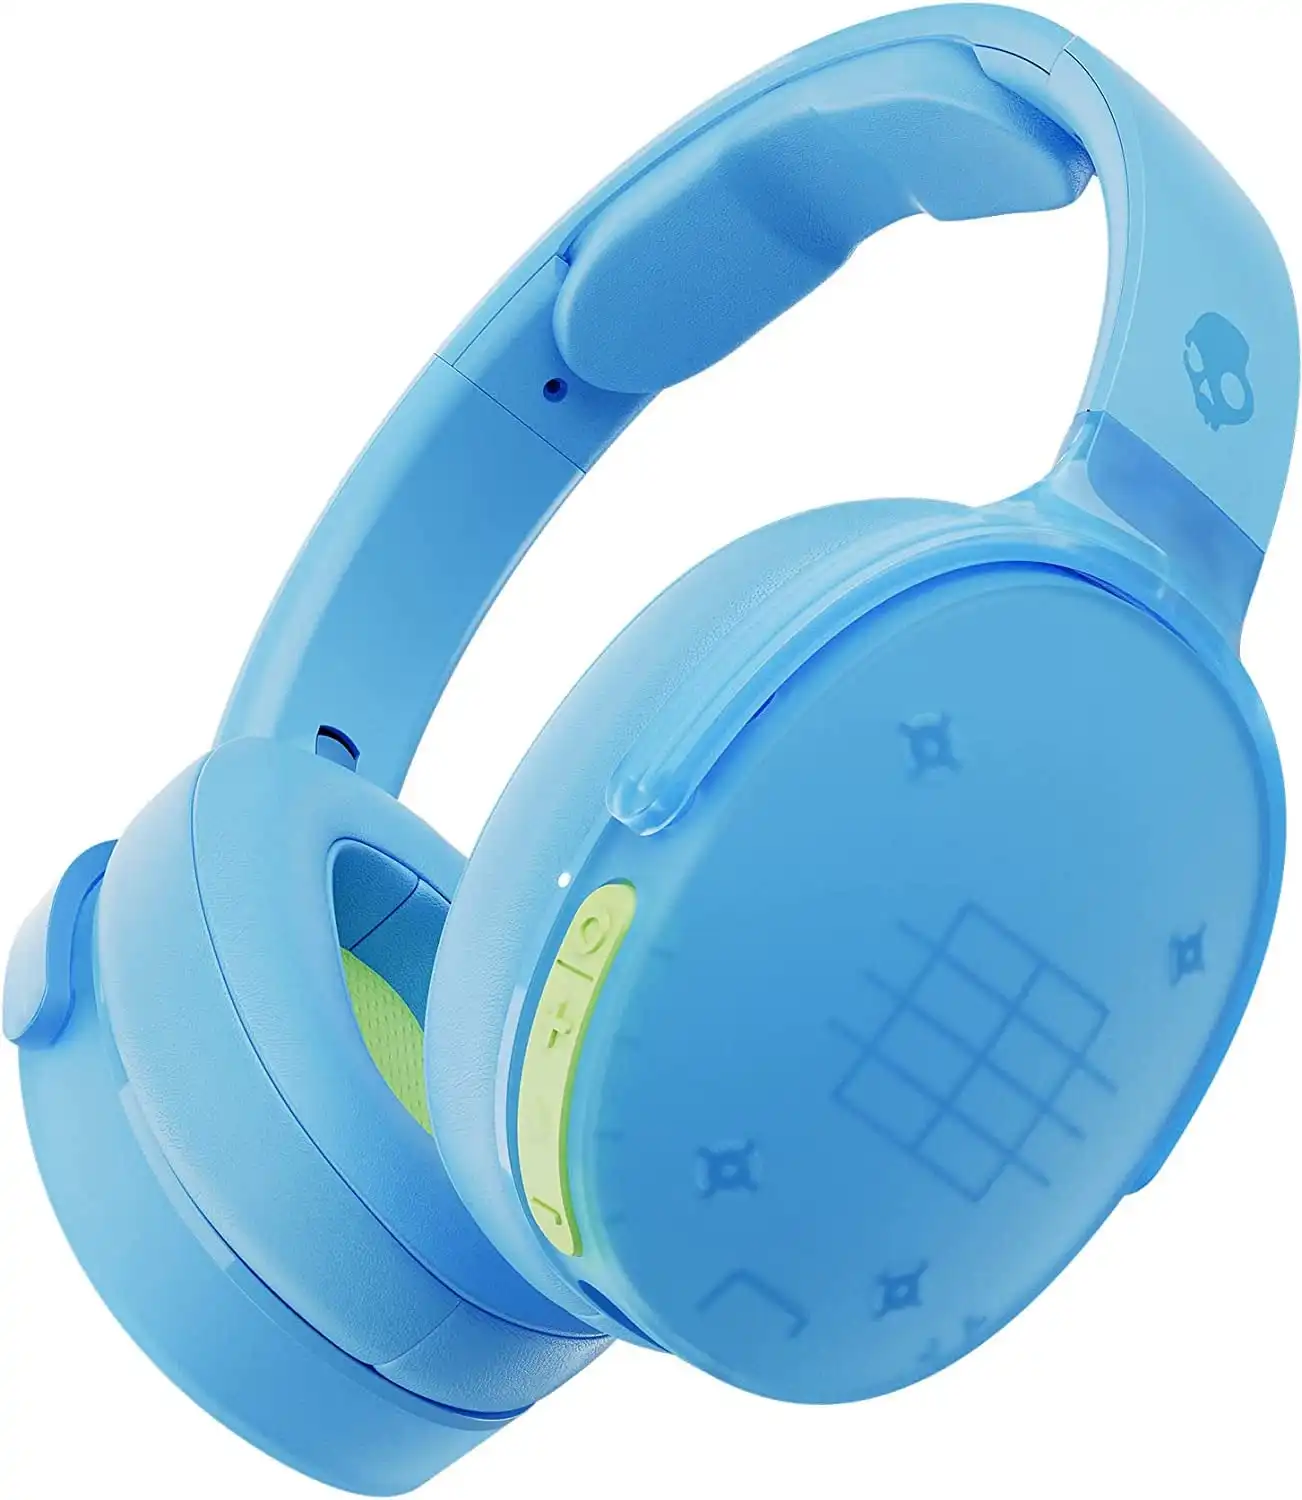 Skullcandy Hesh Evo Wireless Over-Ear Headphones Transparency Edition - Clear Color